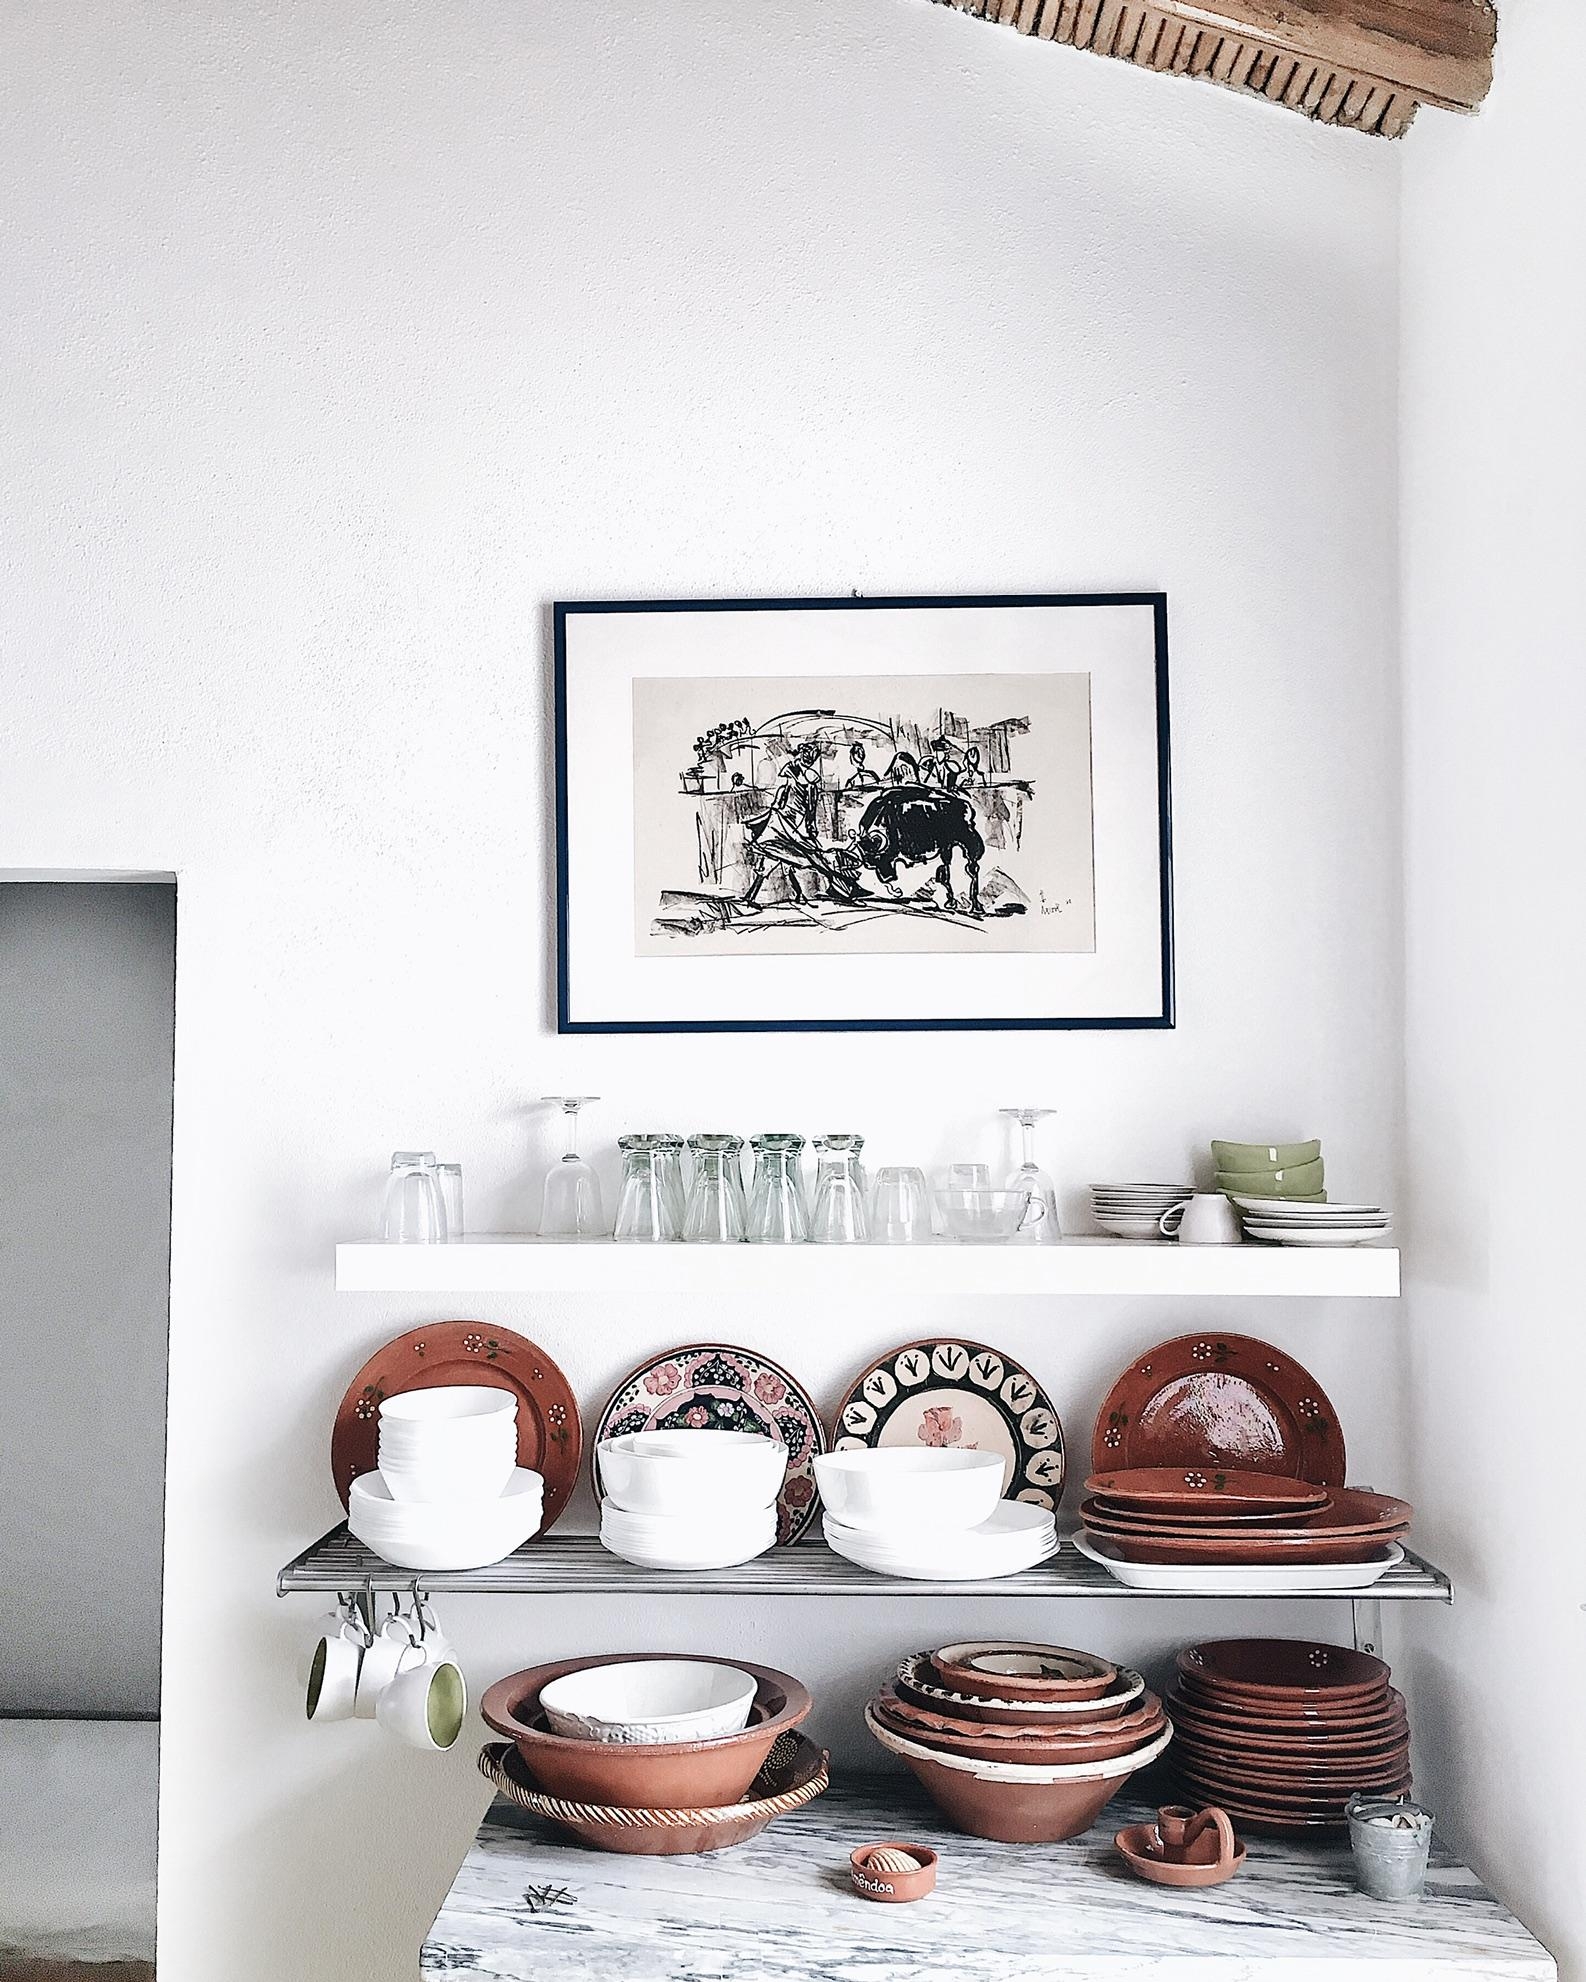 Minimalistic portugese home. Feel the calmness. #interior #kitchen #minimalistic #clean #rustic